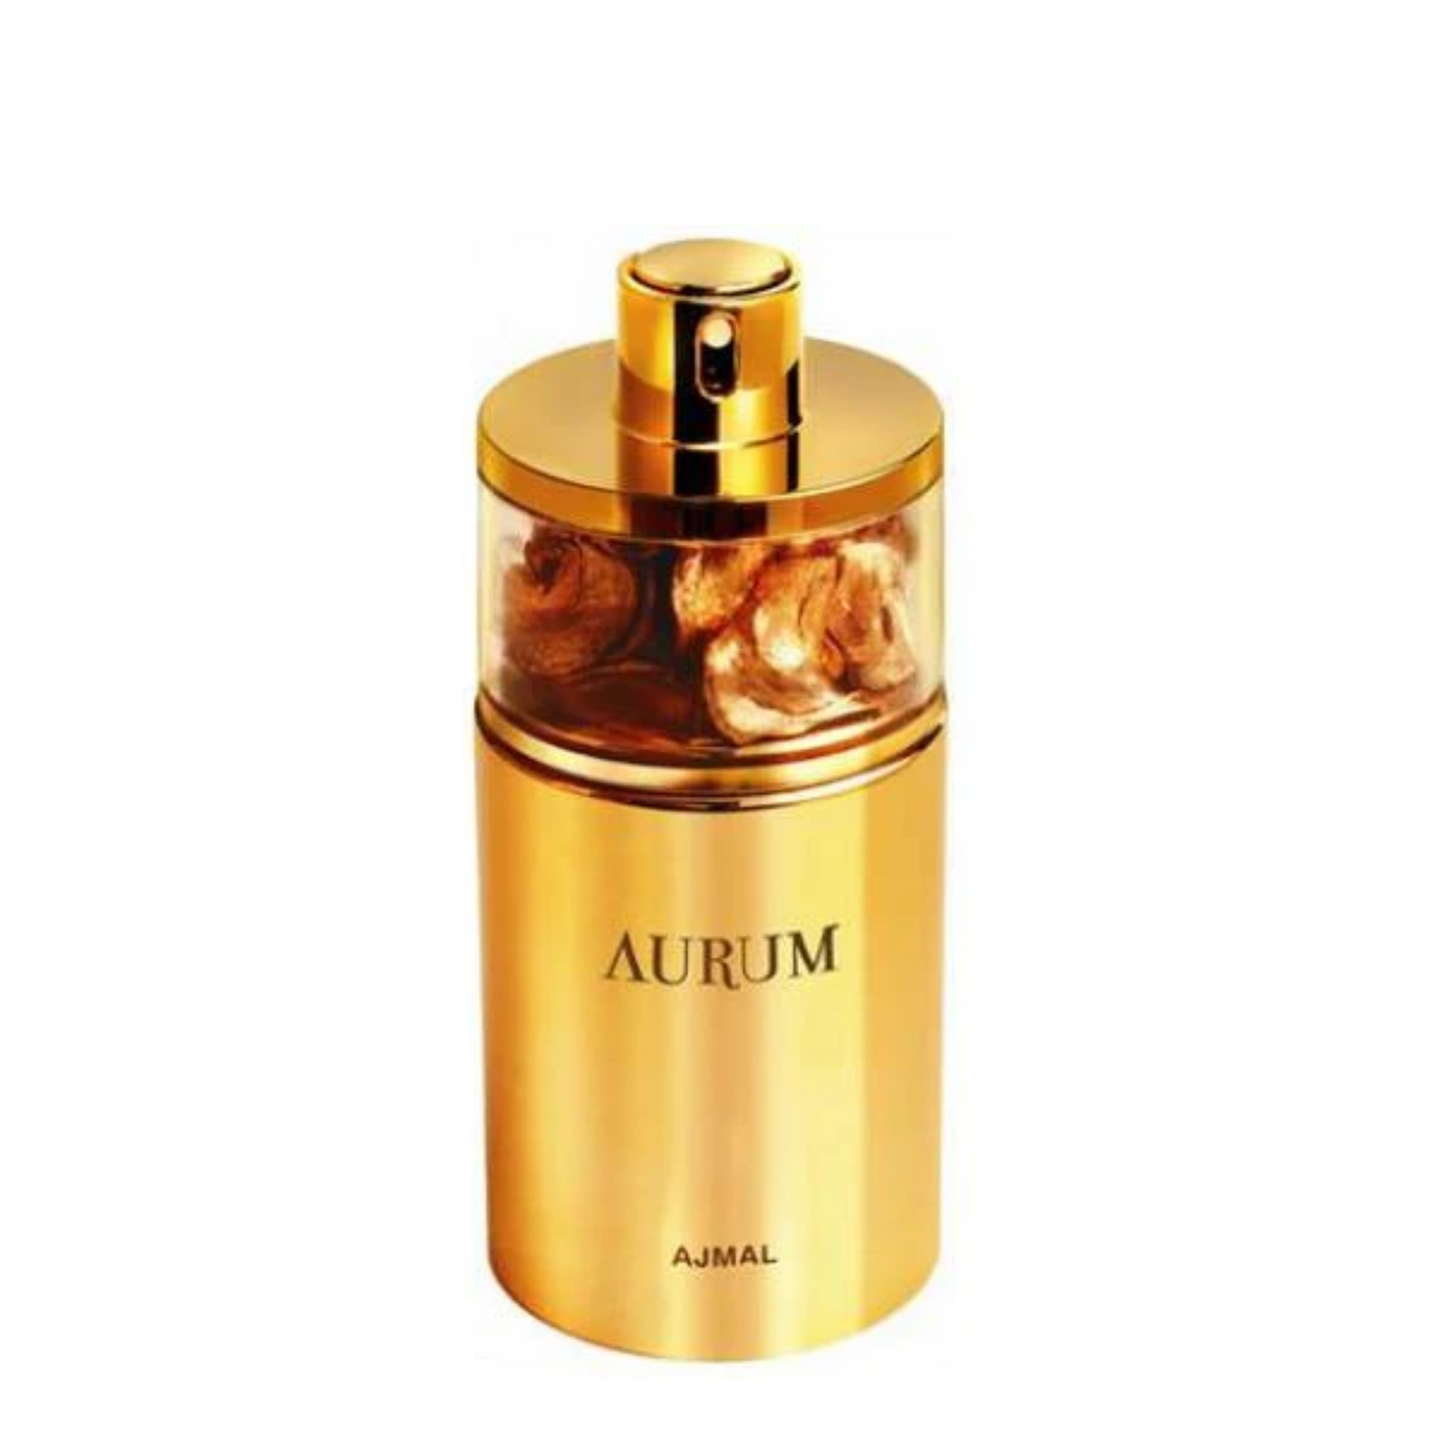 Aurum by Ajmal type Perfume for Women